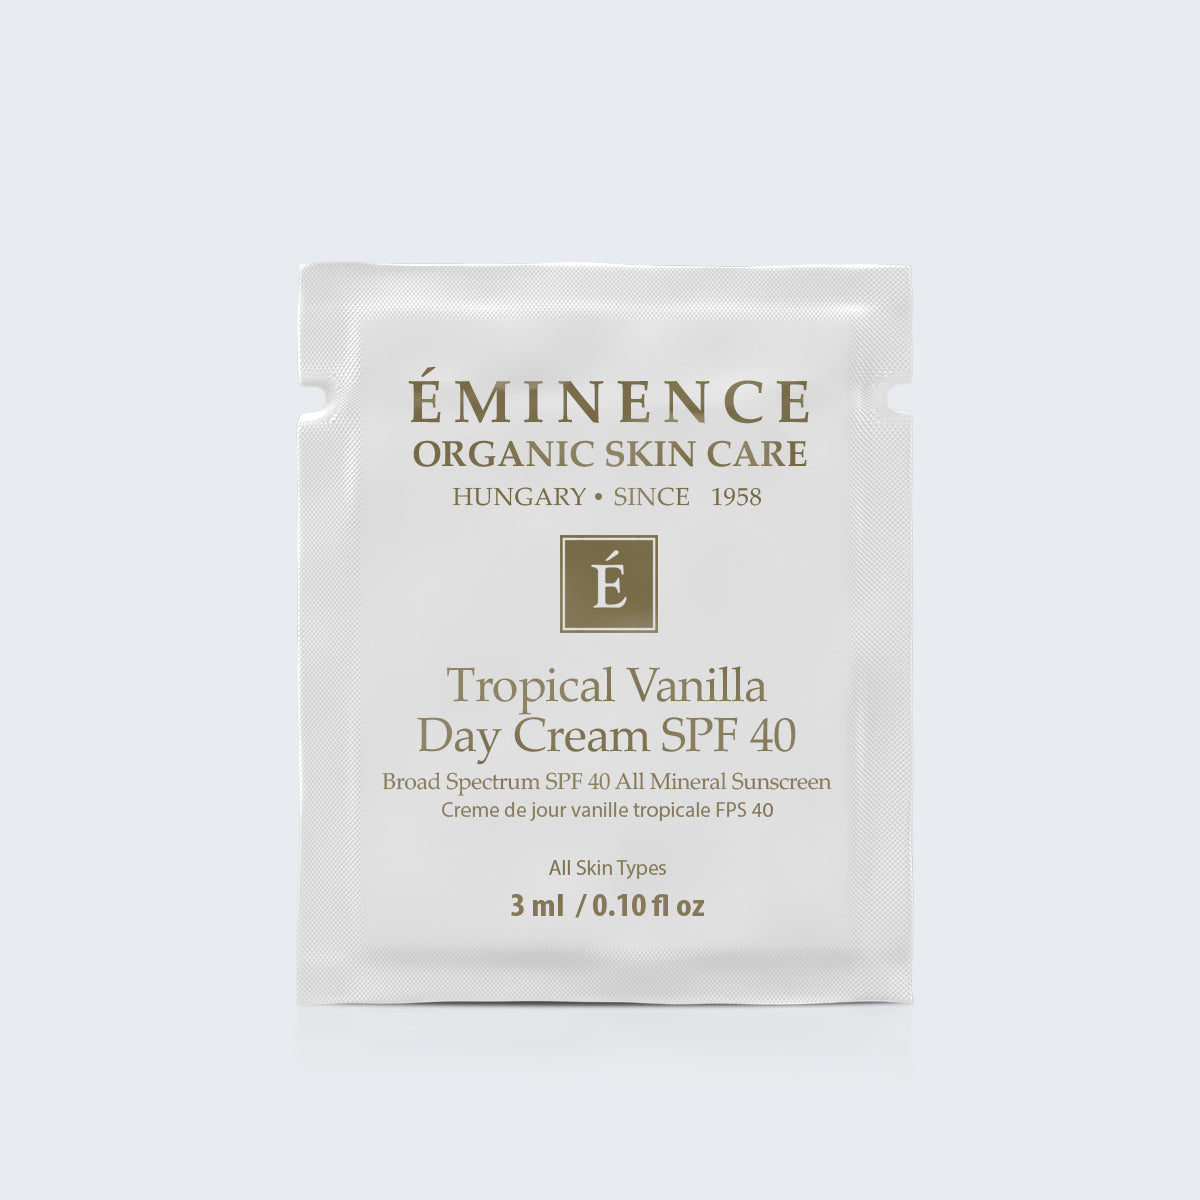 Eminence Organics Tropical Vanilla Day Cream SPF 40 Card Sample